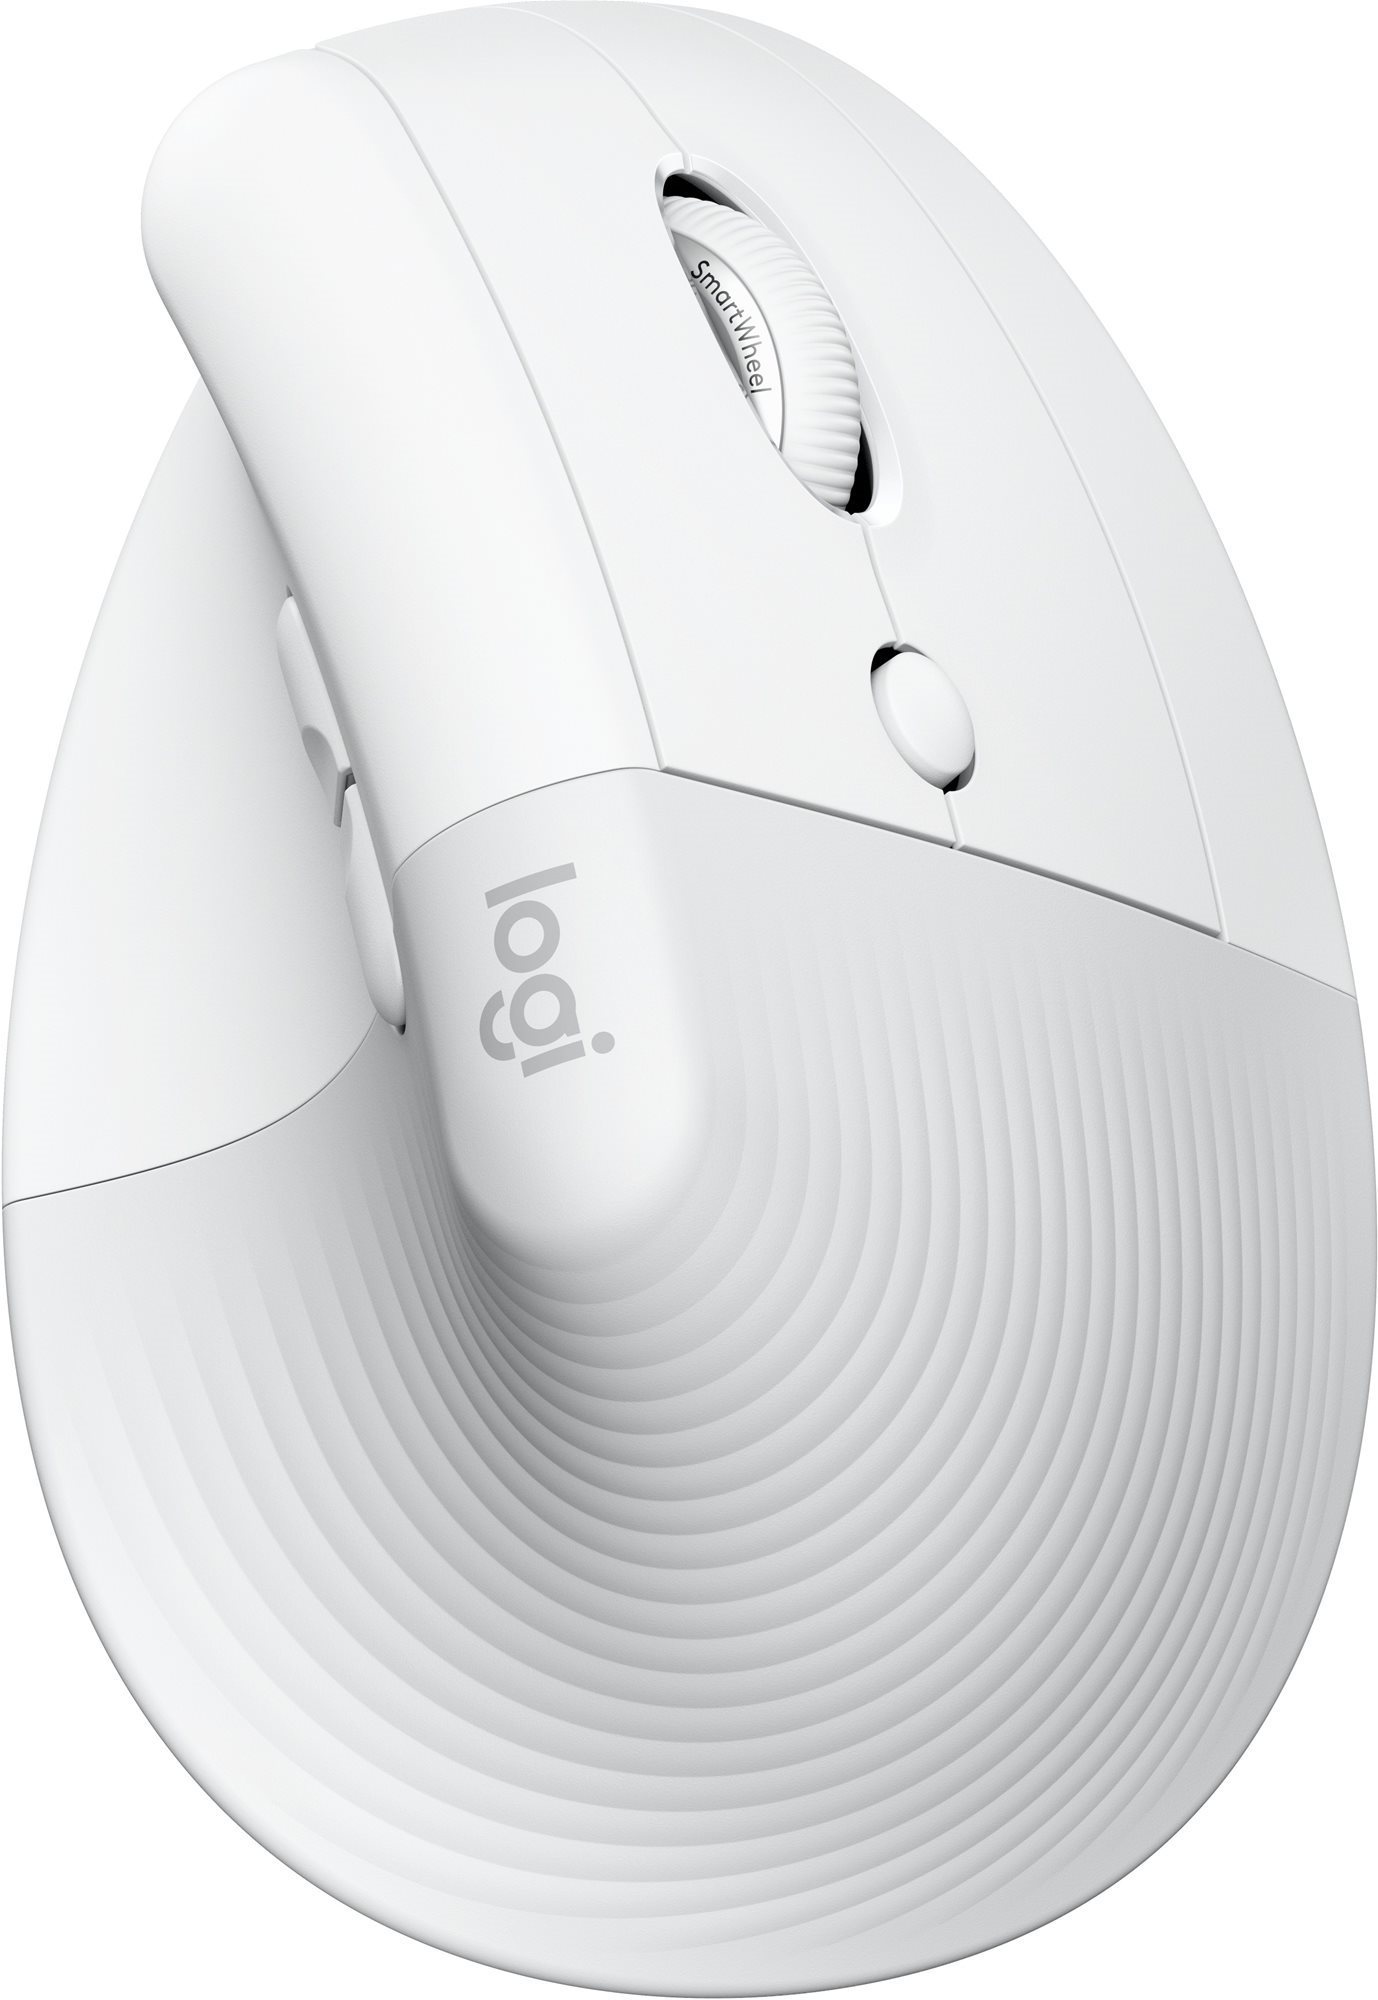 Logitech Lift Vertical Ergonomic Mouse for Business Off-White